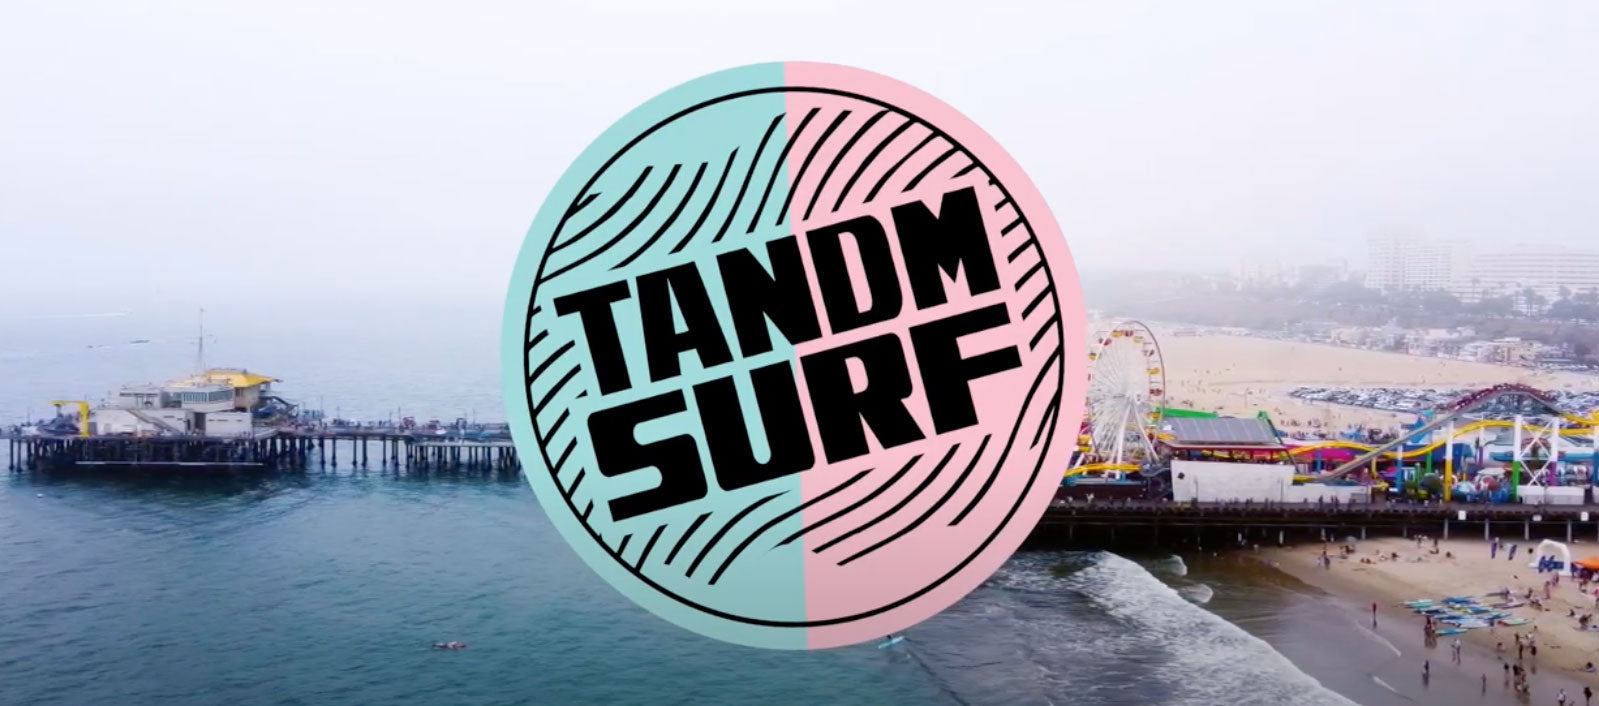 TANDM Surf Santa Monica Pier Bodyboard Contest Highlights